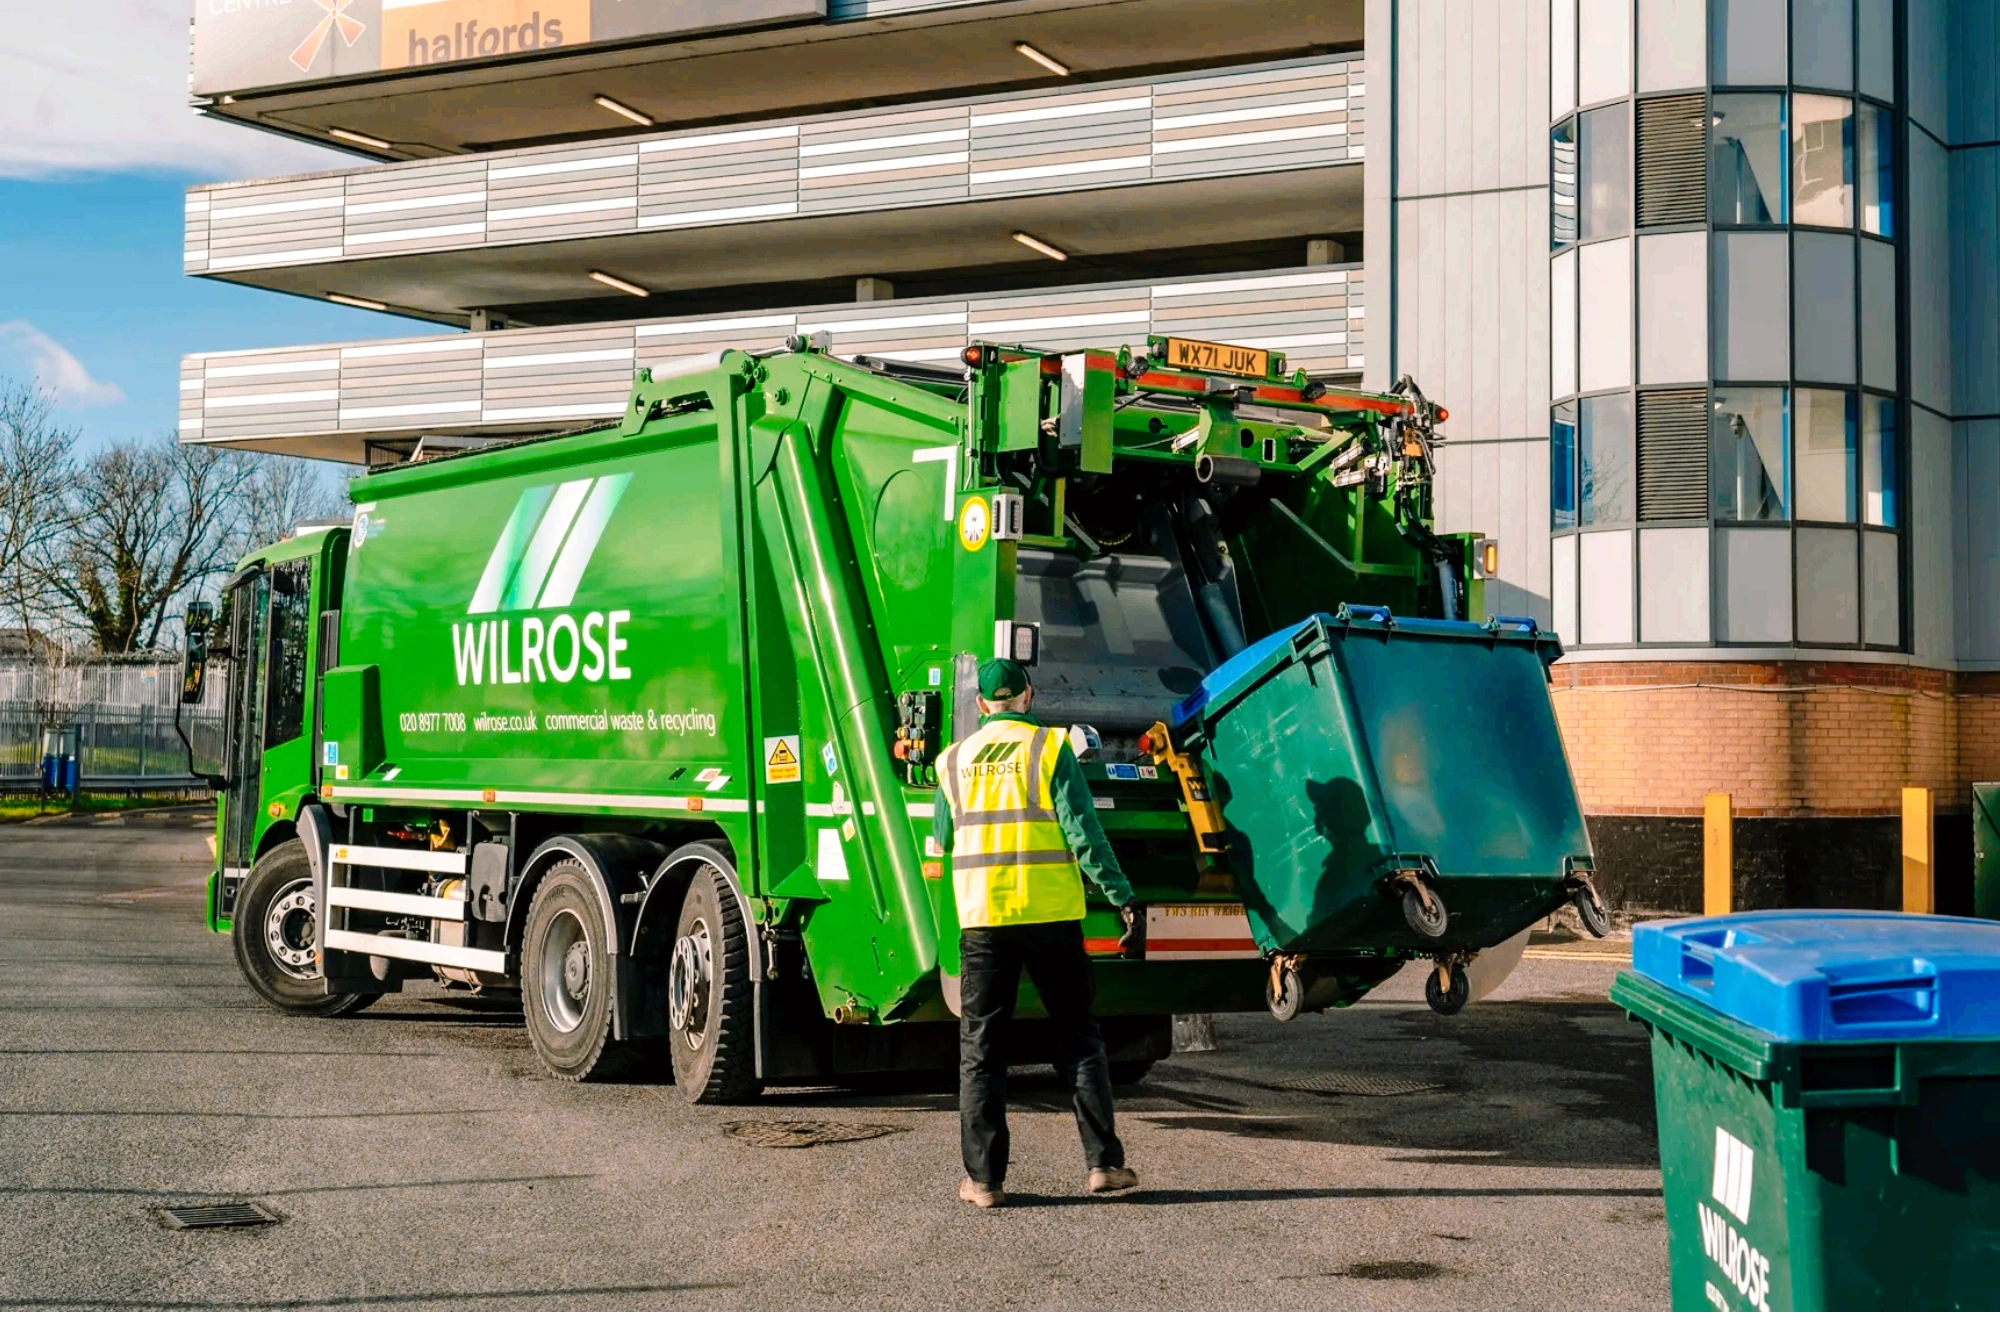 Emptying of wheelie bin into back of commercial dustcart in Wimbledon.